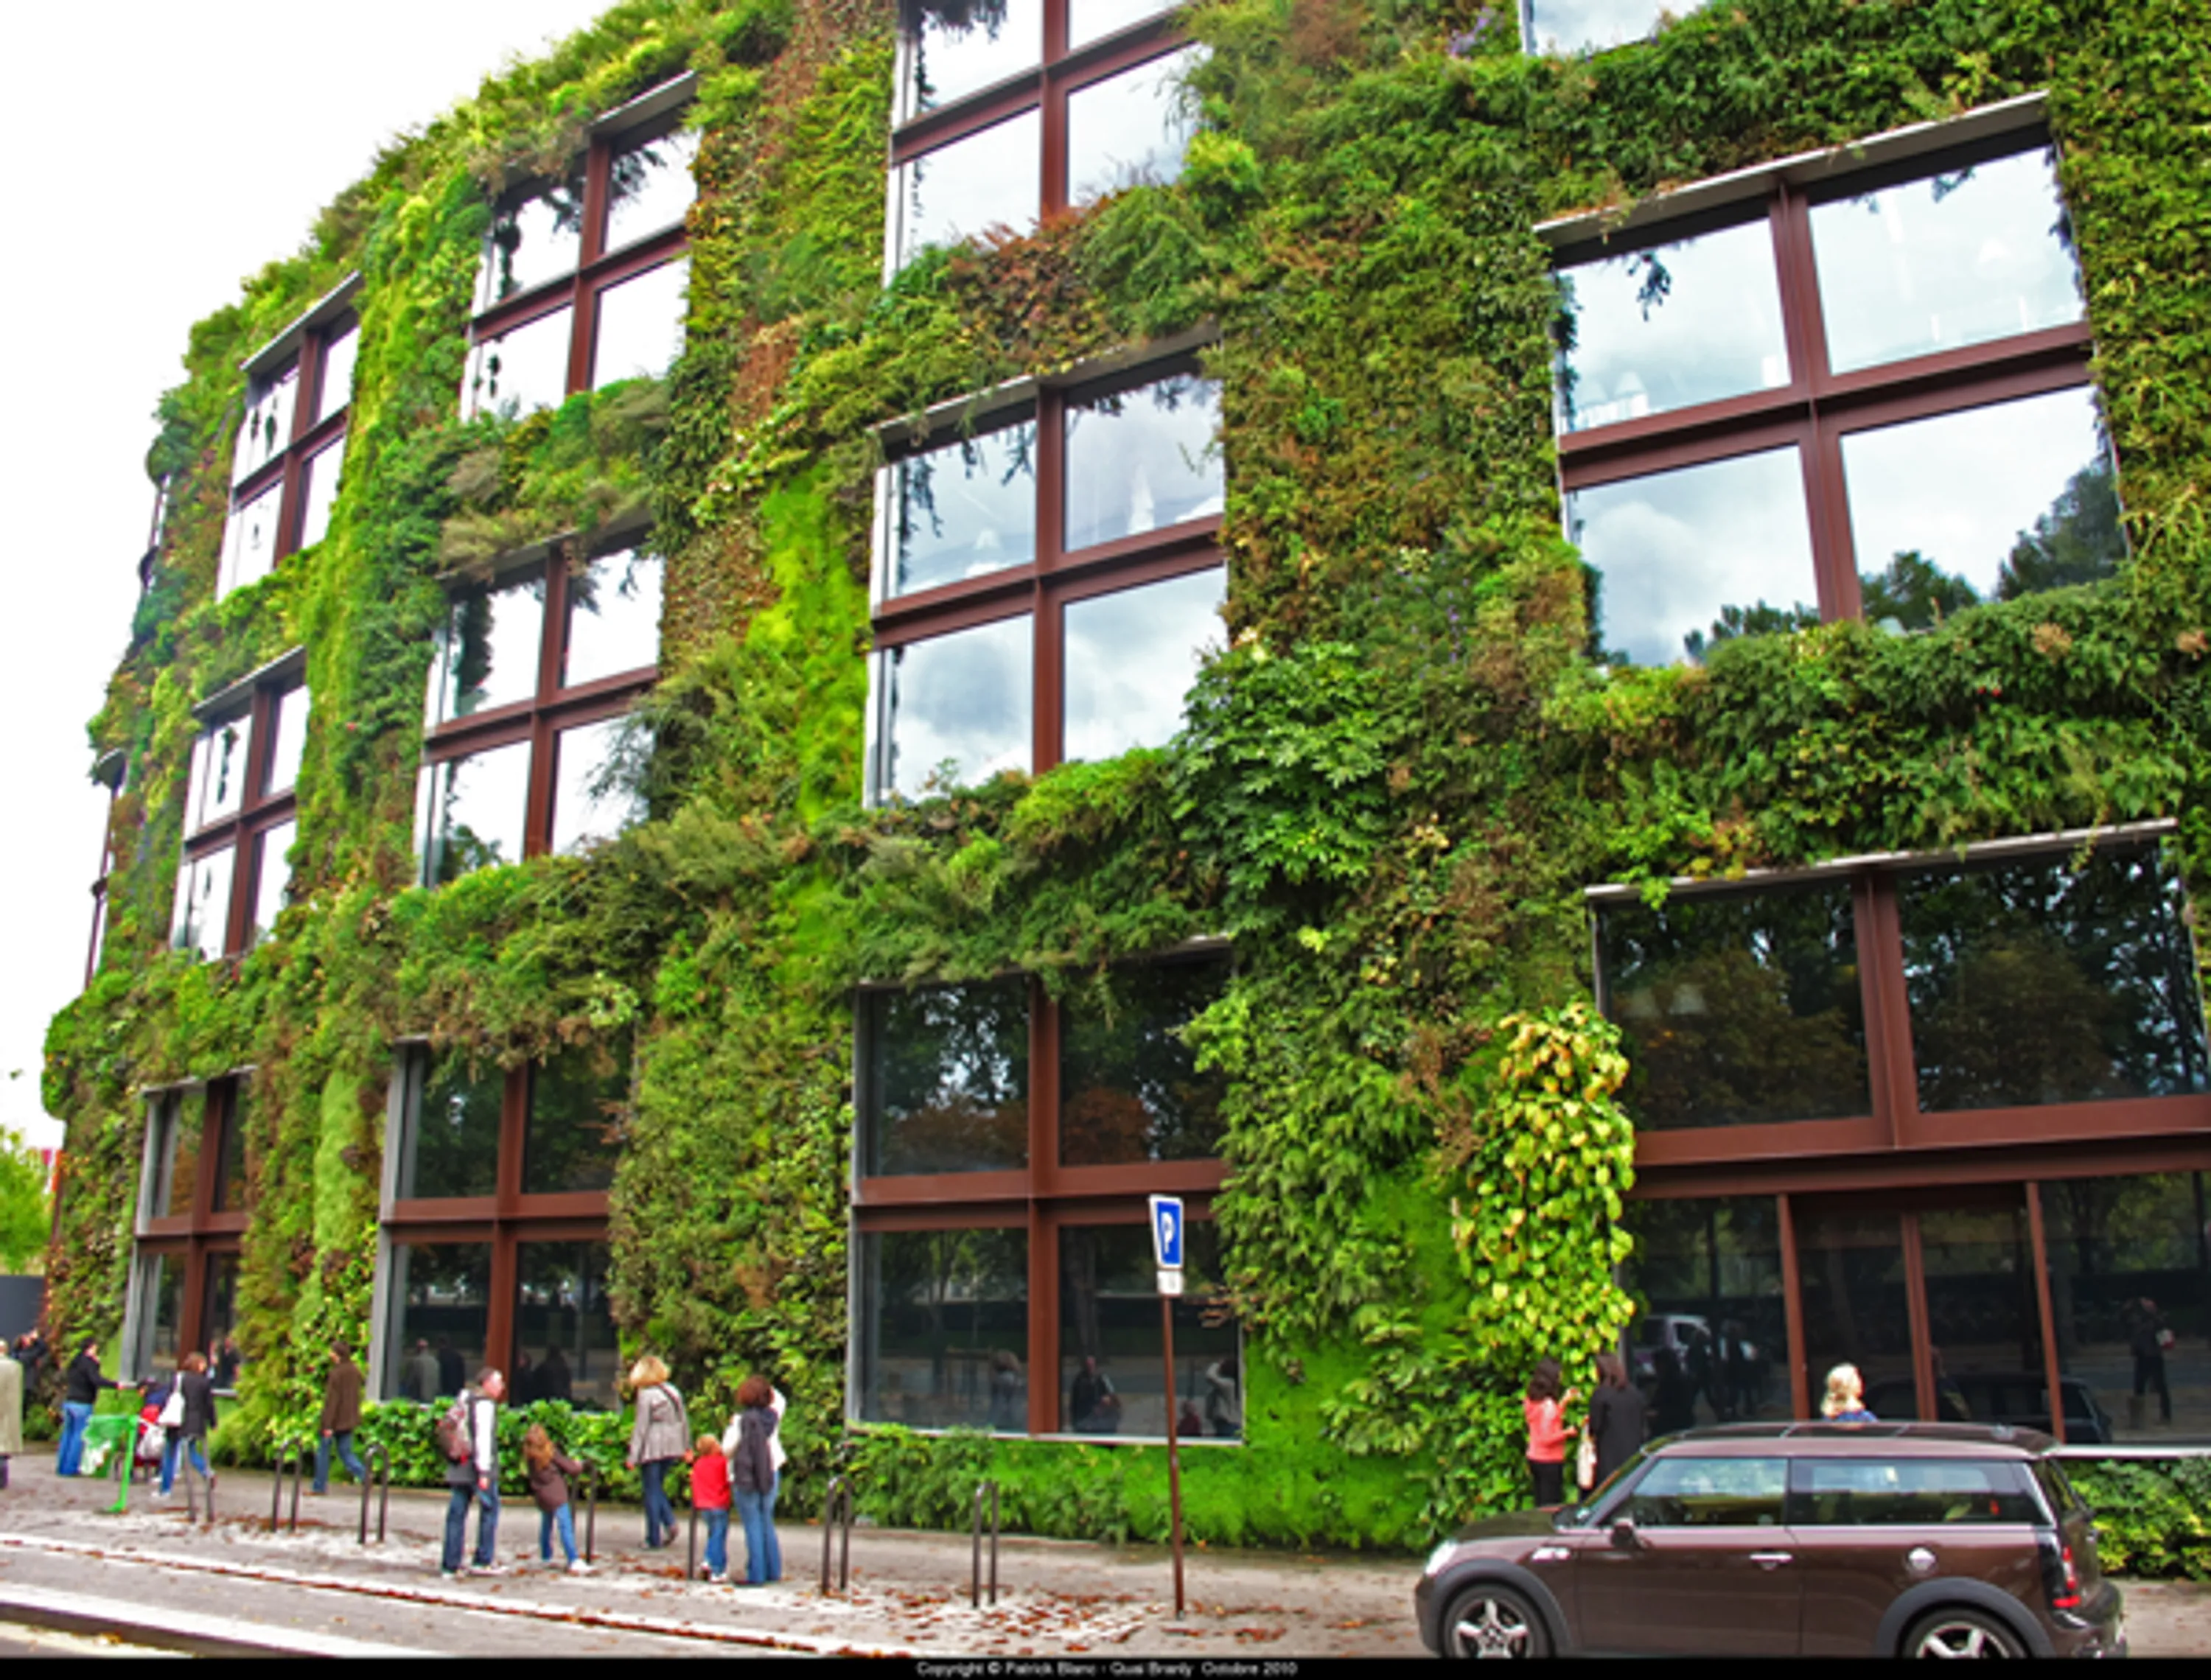 1 musee des arts premiers paris vertical greenings cities blog hoerrschaudt